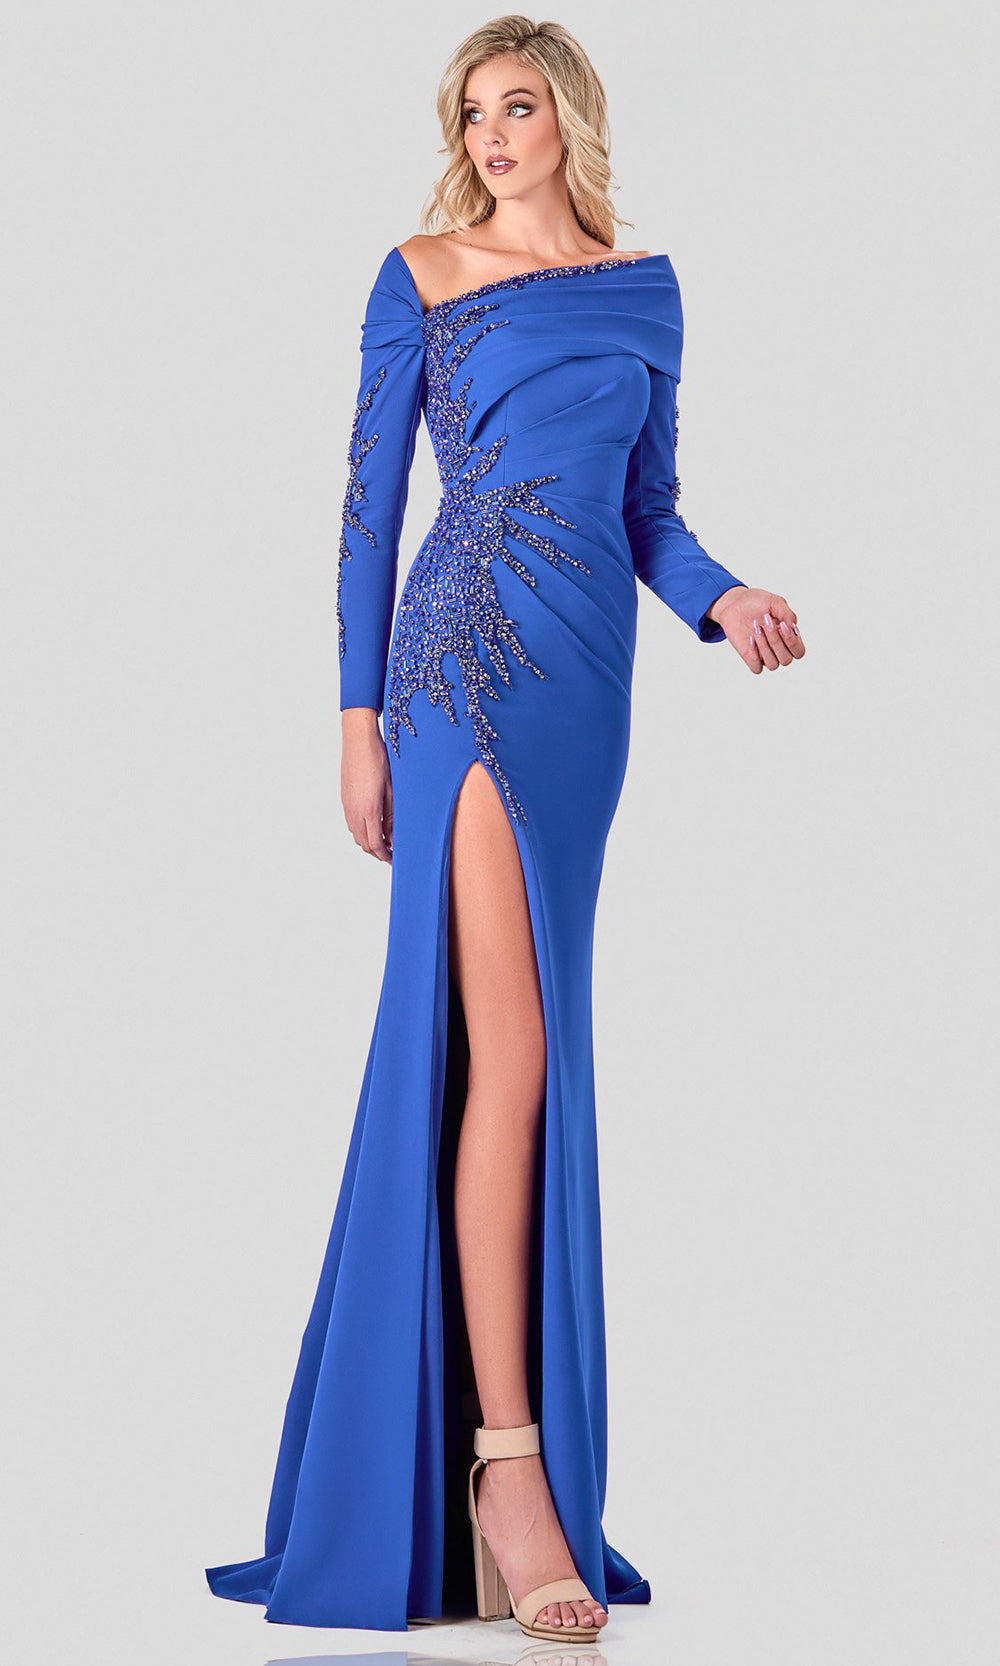 Terani Couture 2111M5263 In Blue